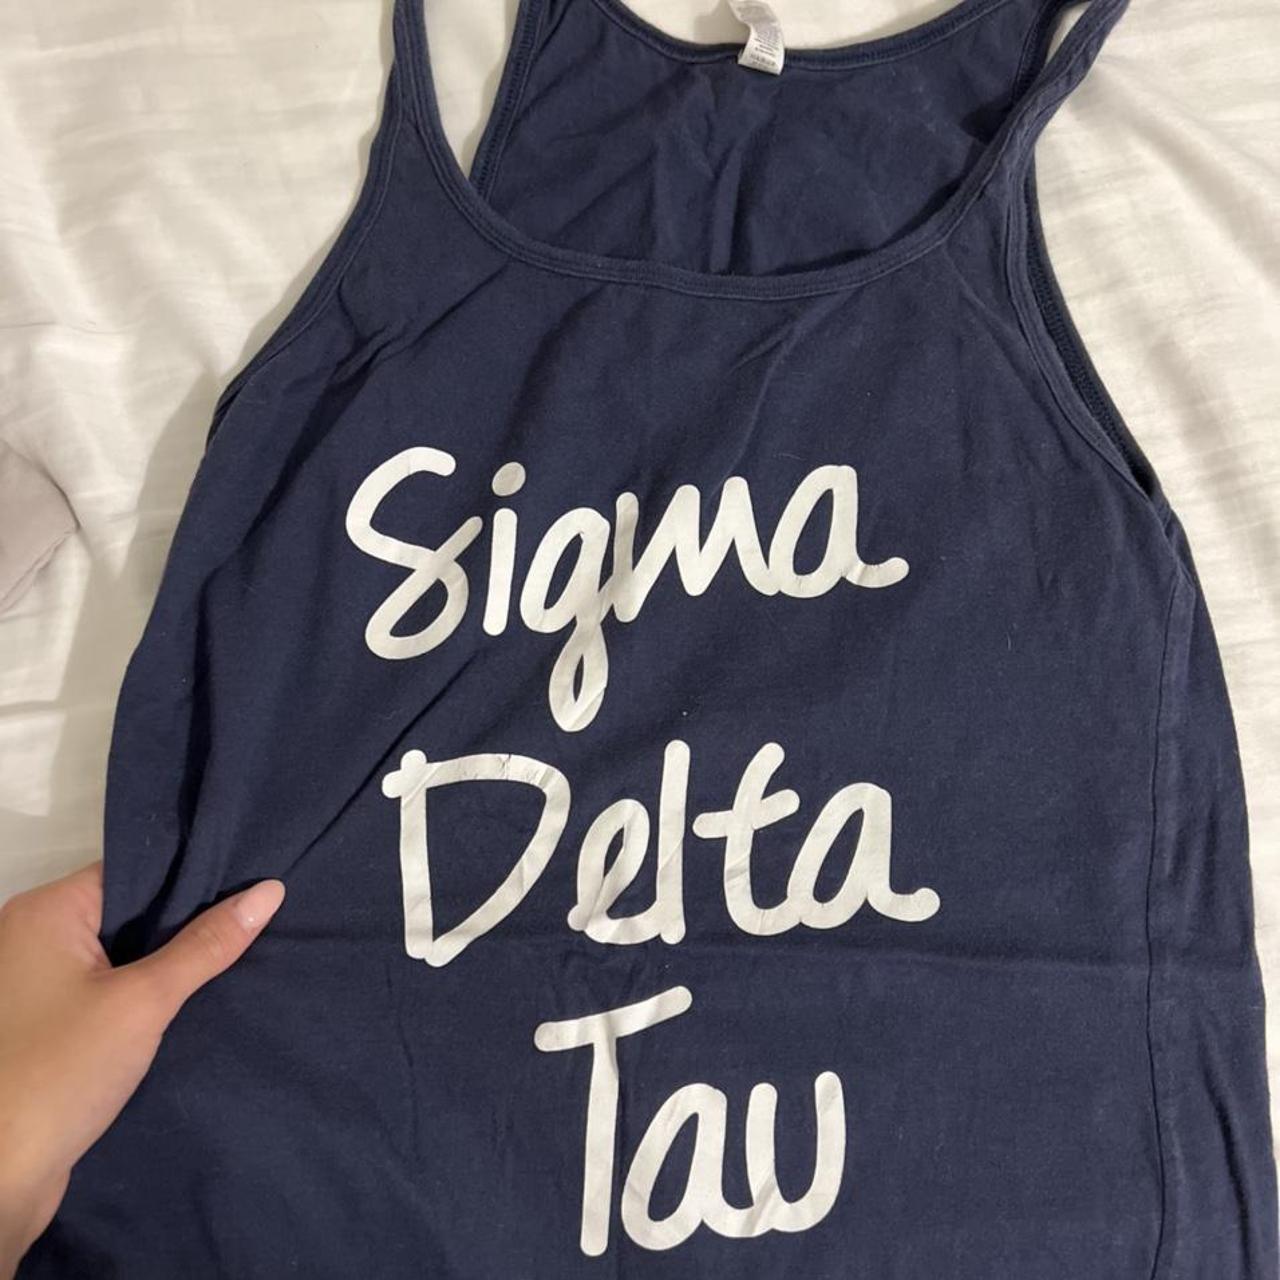 Sigma delta tau shirt bundle Includes 8 items-... - Depop